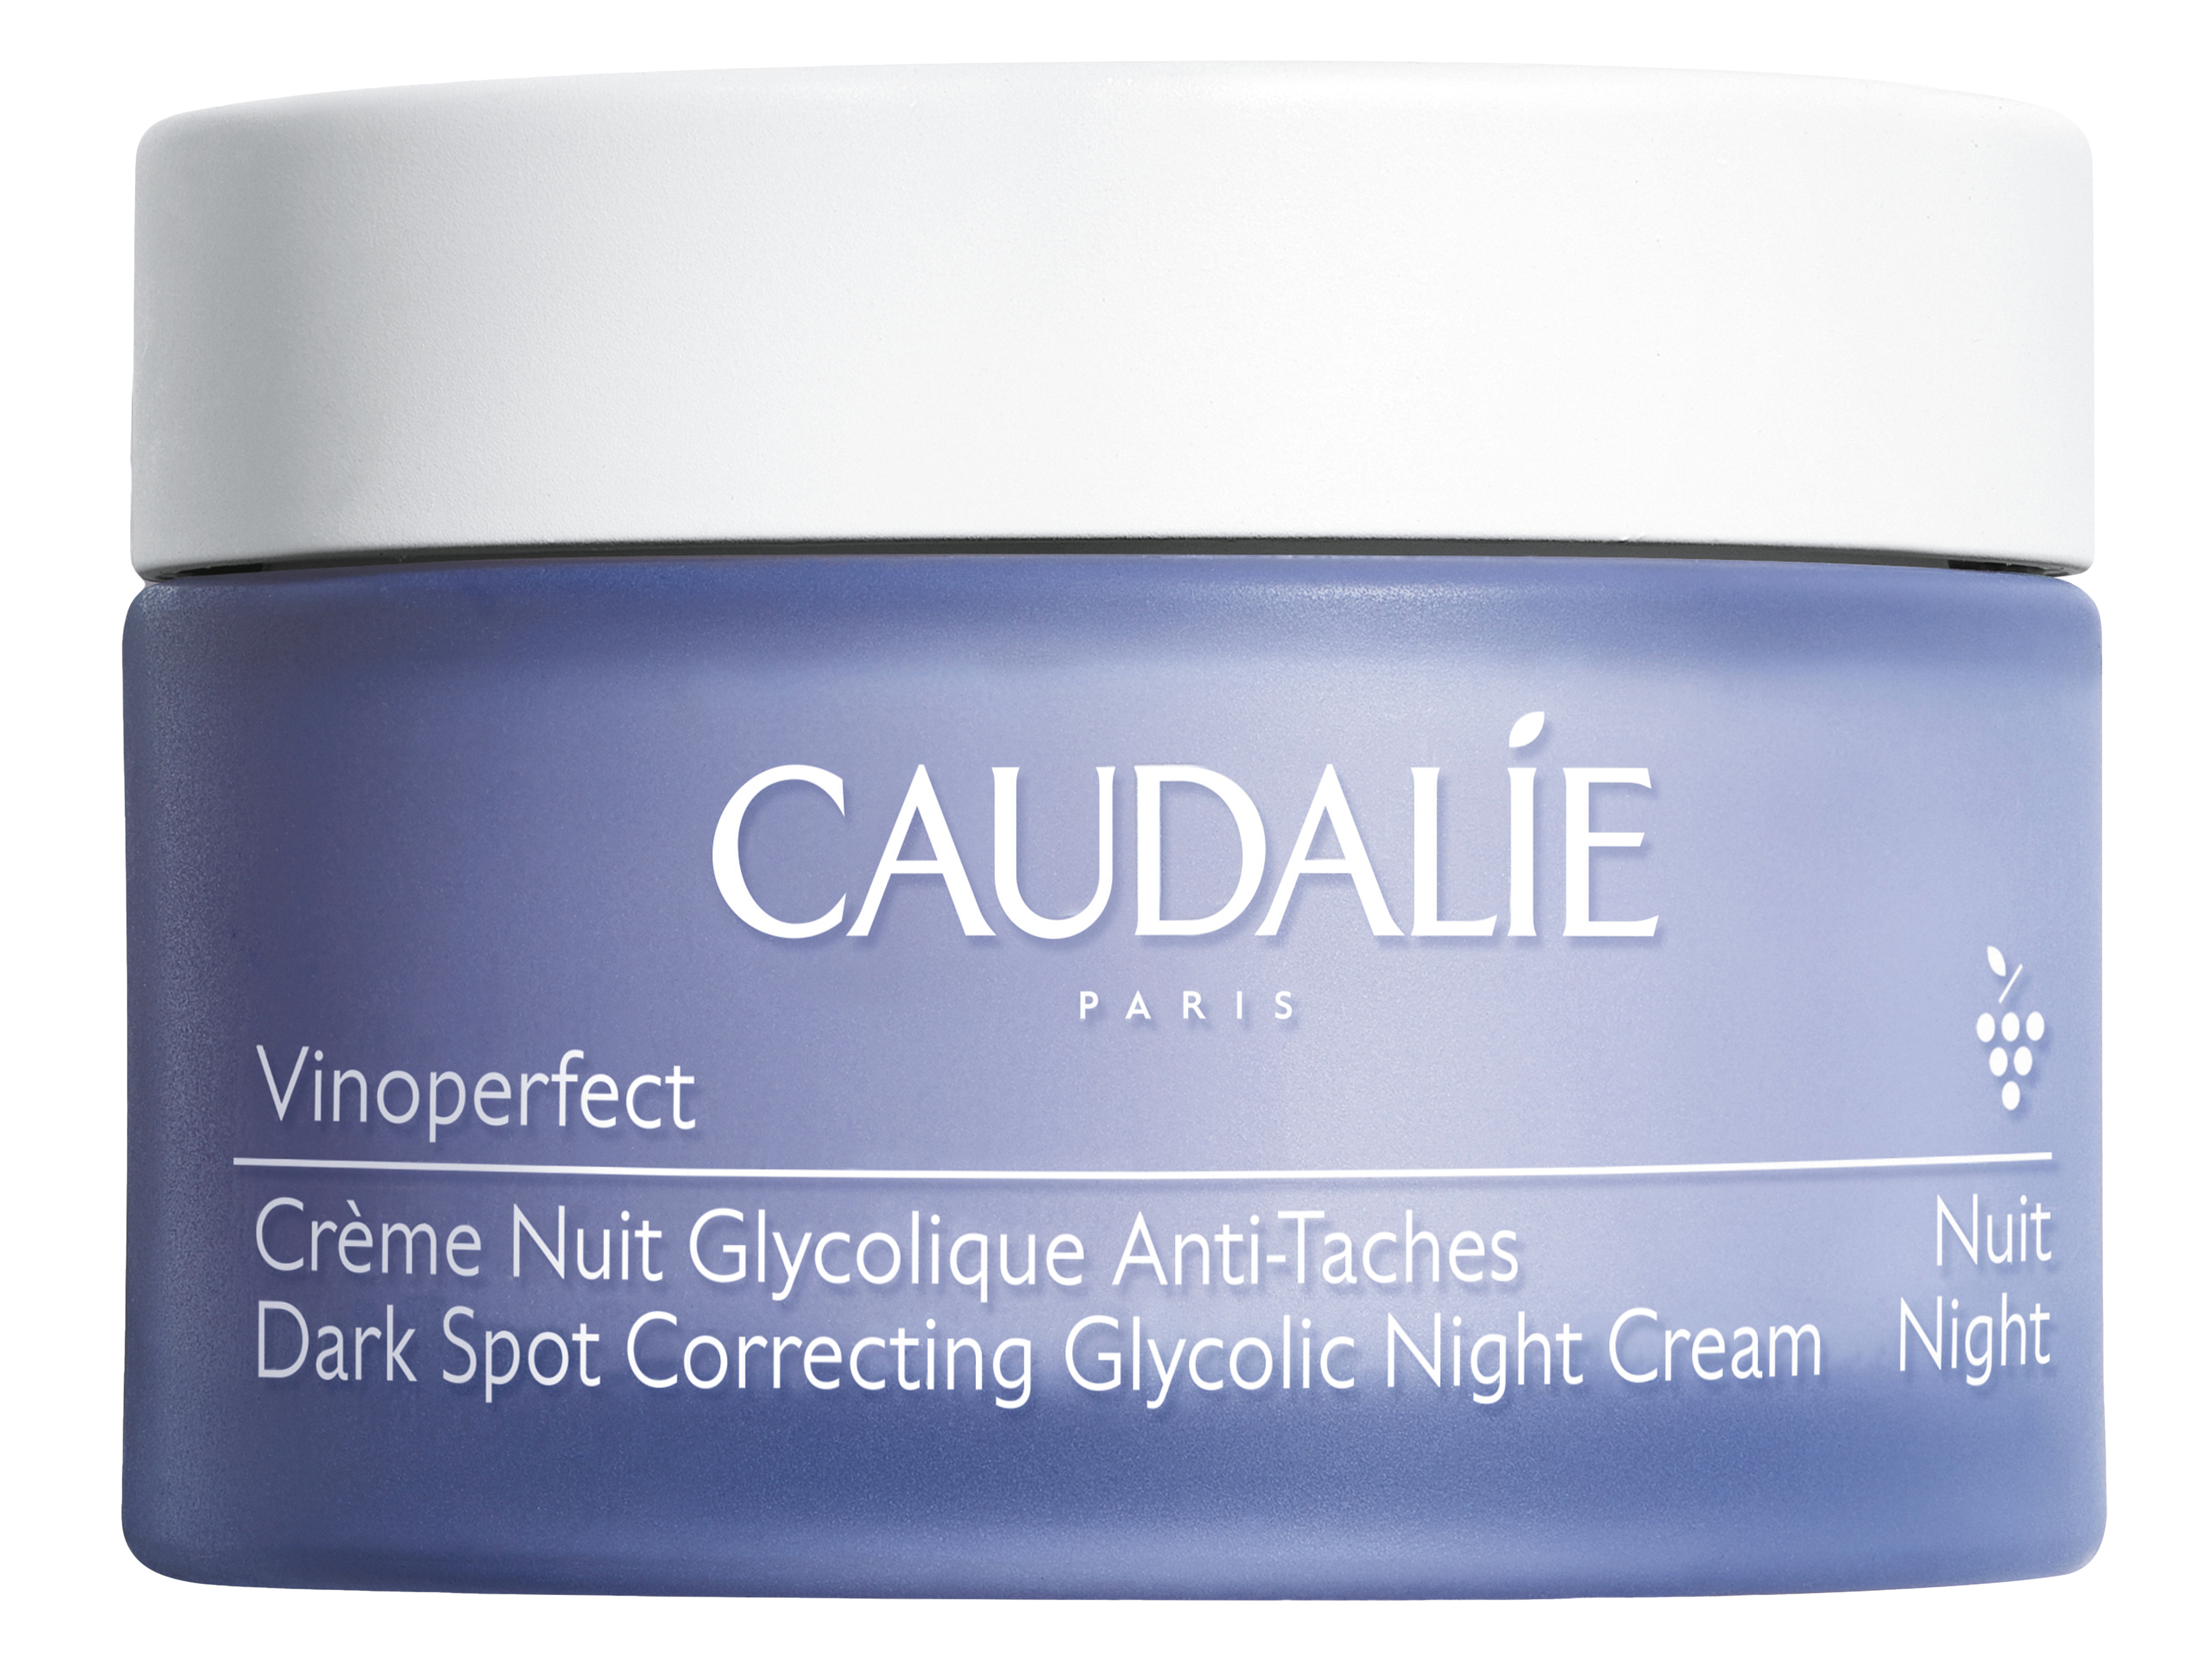 Caudalie Vinoperfect Dark Spot Correcting Glycolic Night Cream, 50 ml